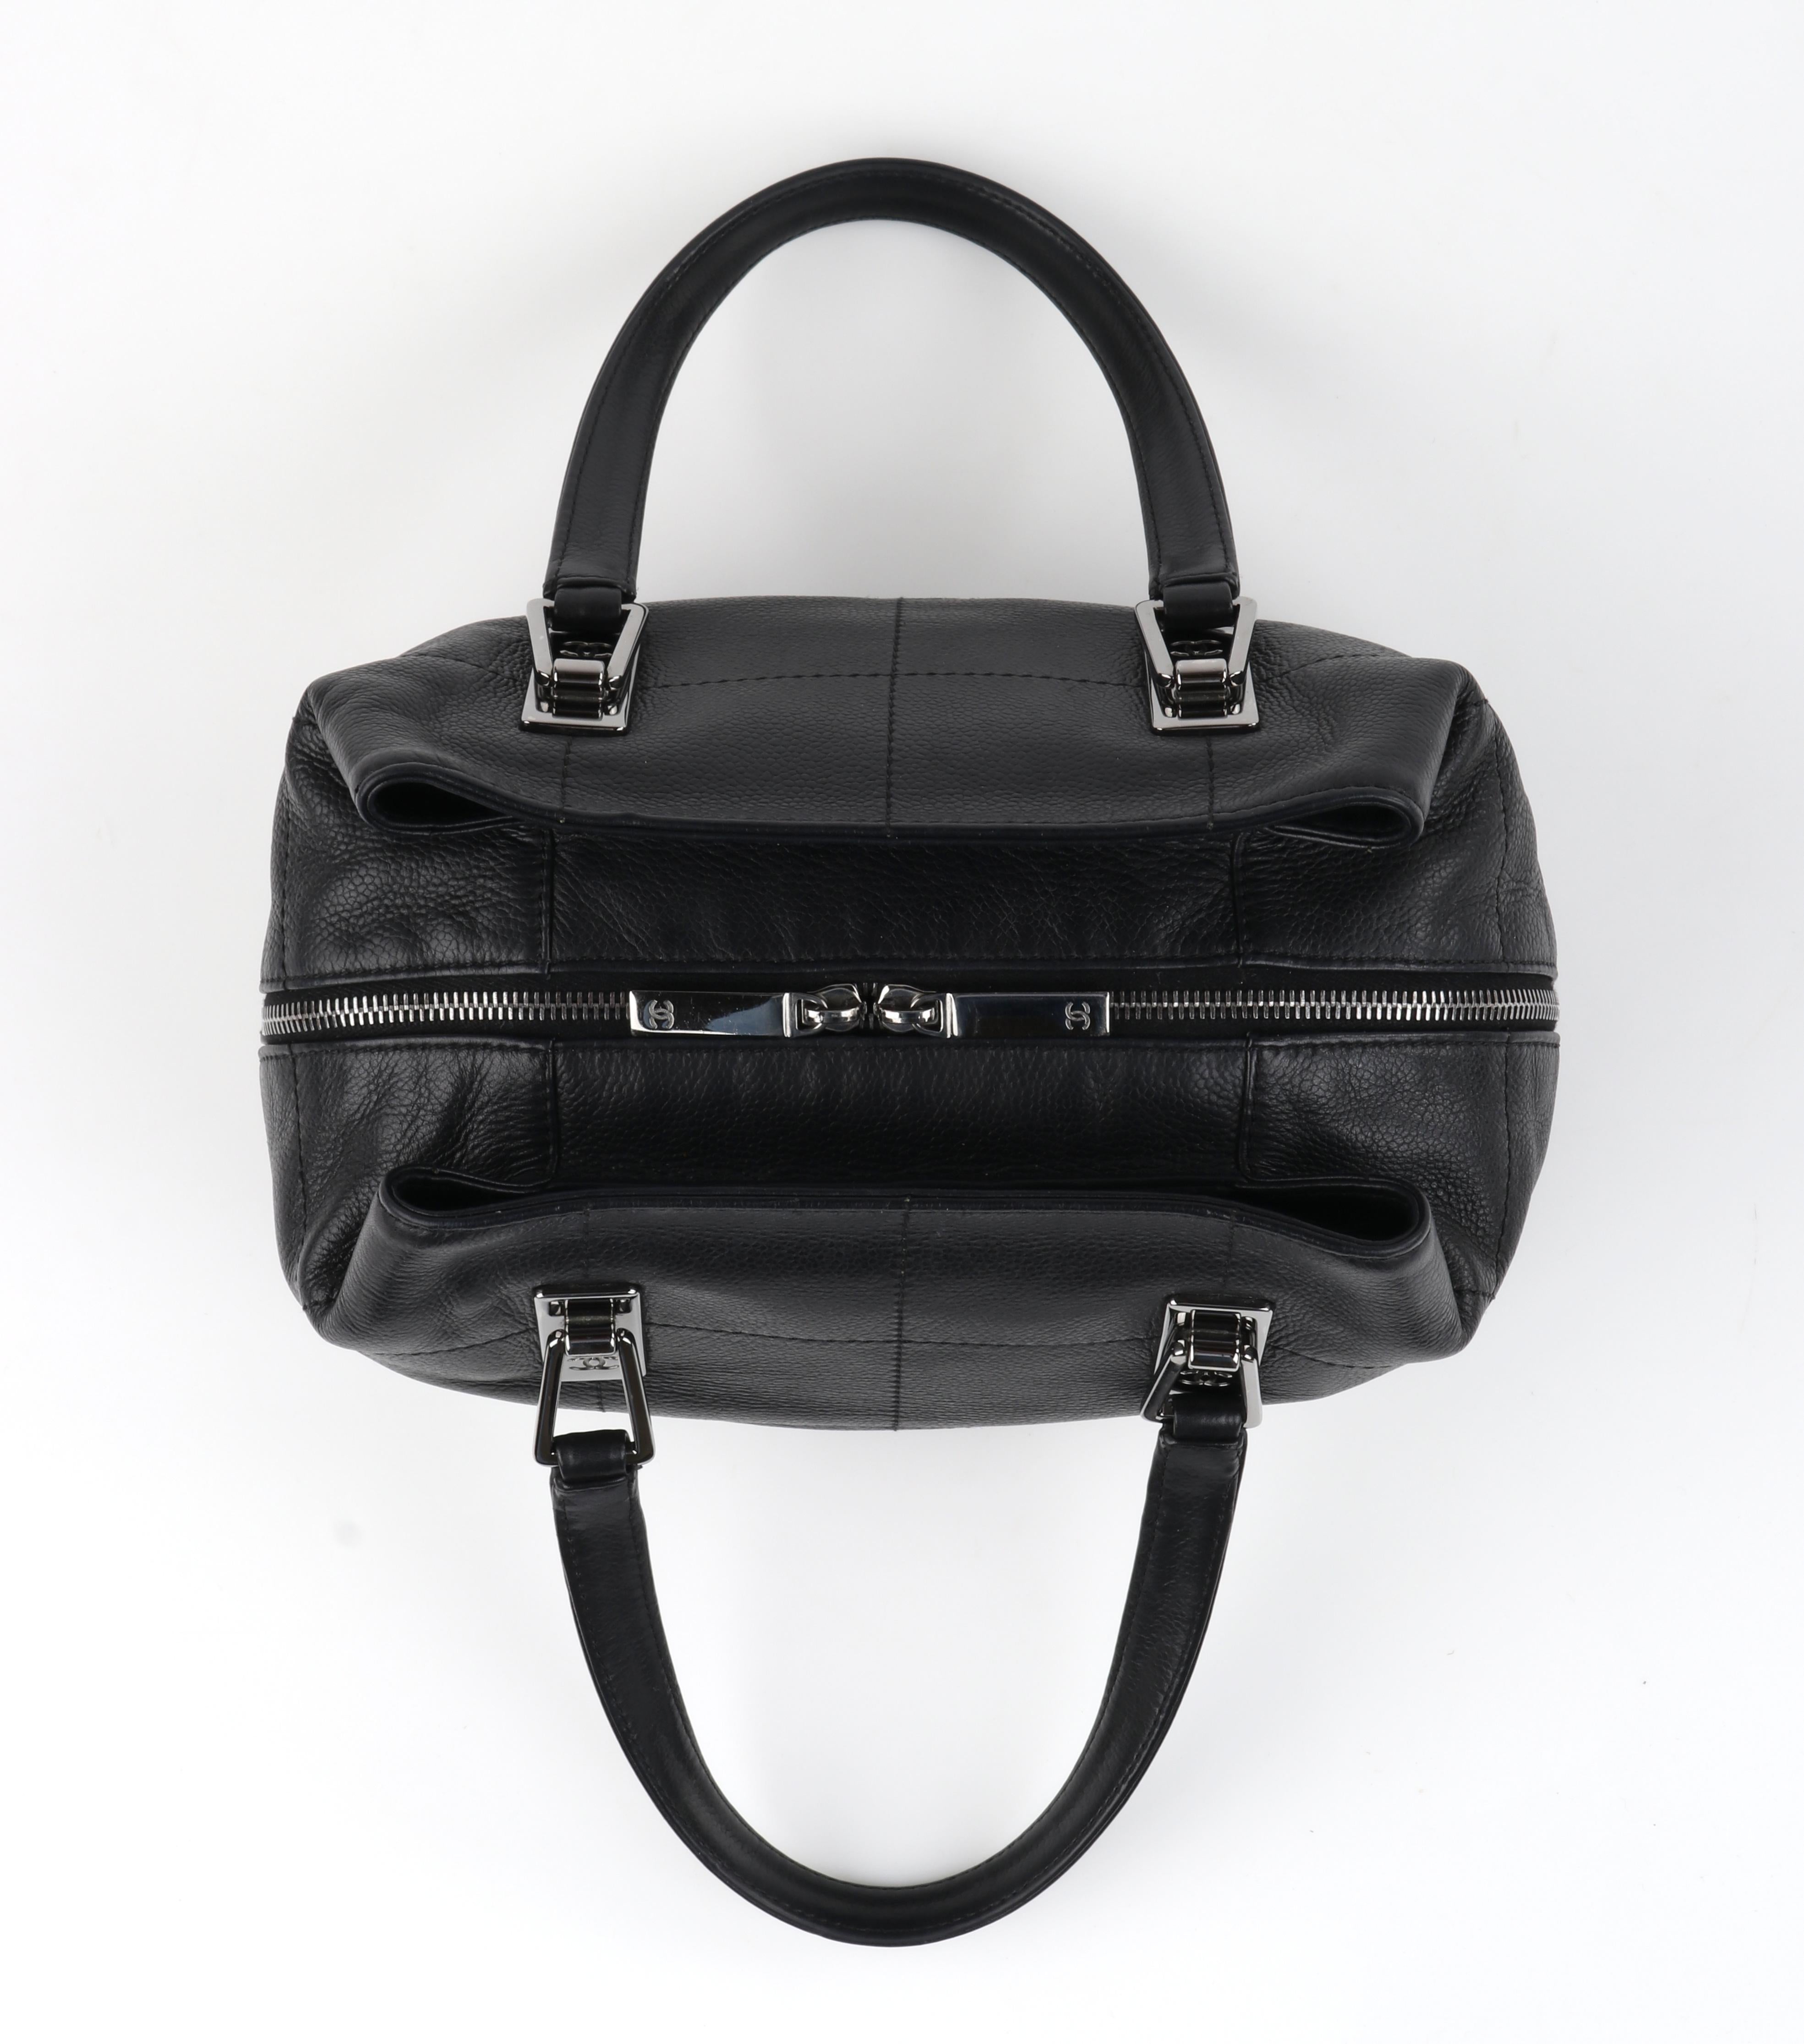 CHANEL Black Caviar Leather Silver Top Handle Quilted Satchel Handbag Purse 1